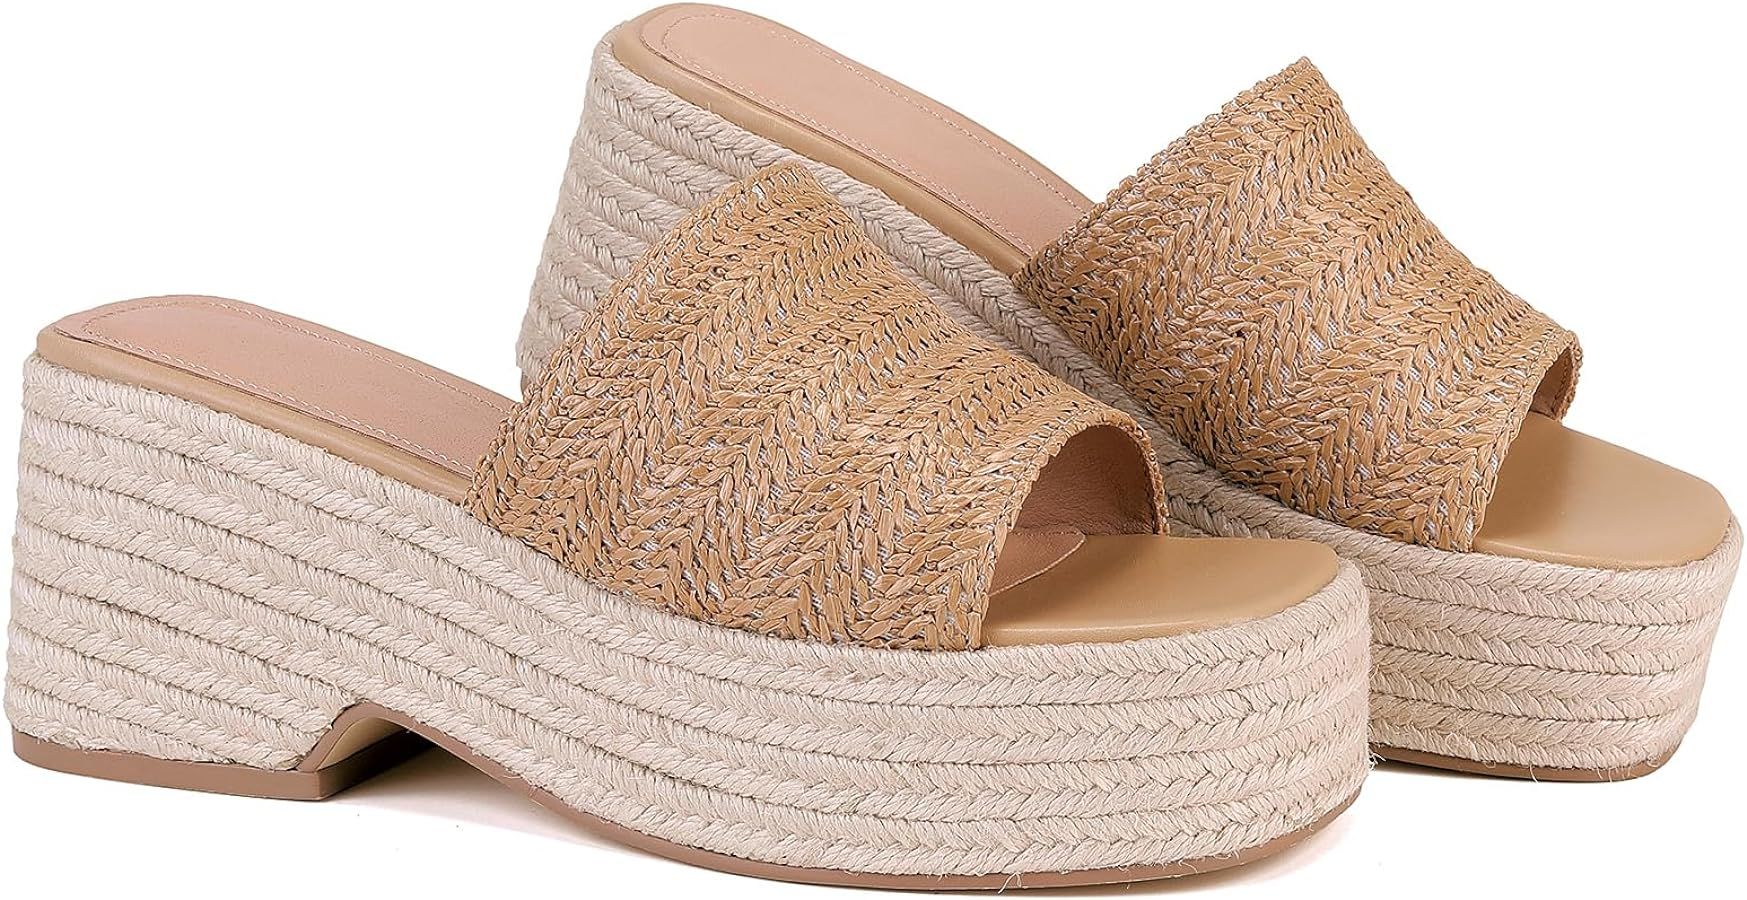 Monrovia Women's Bohemia Platform Wedge Sandals: Flatform Open Toe Slides - Stylish Beach Sandals... | Amazon (US)